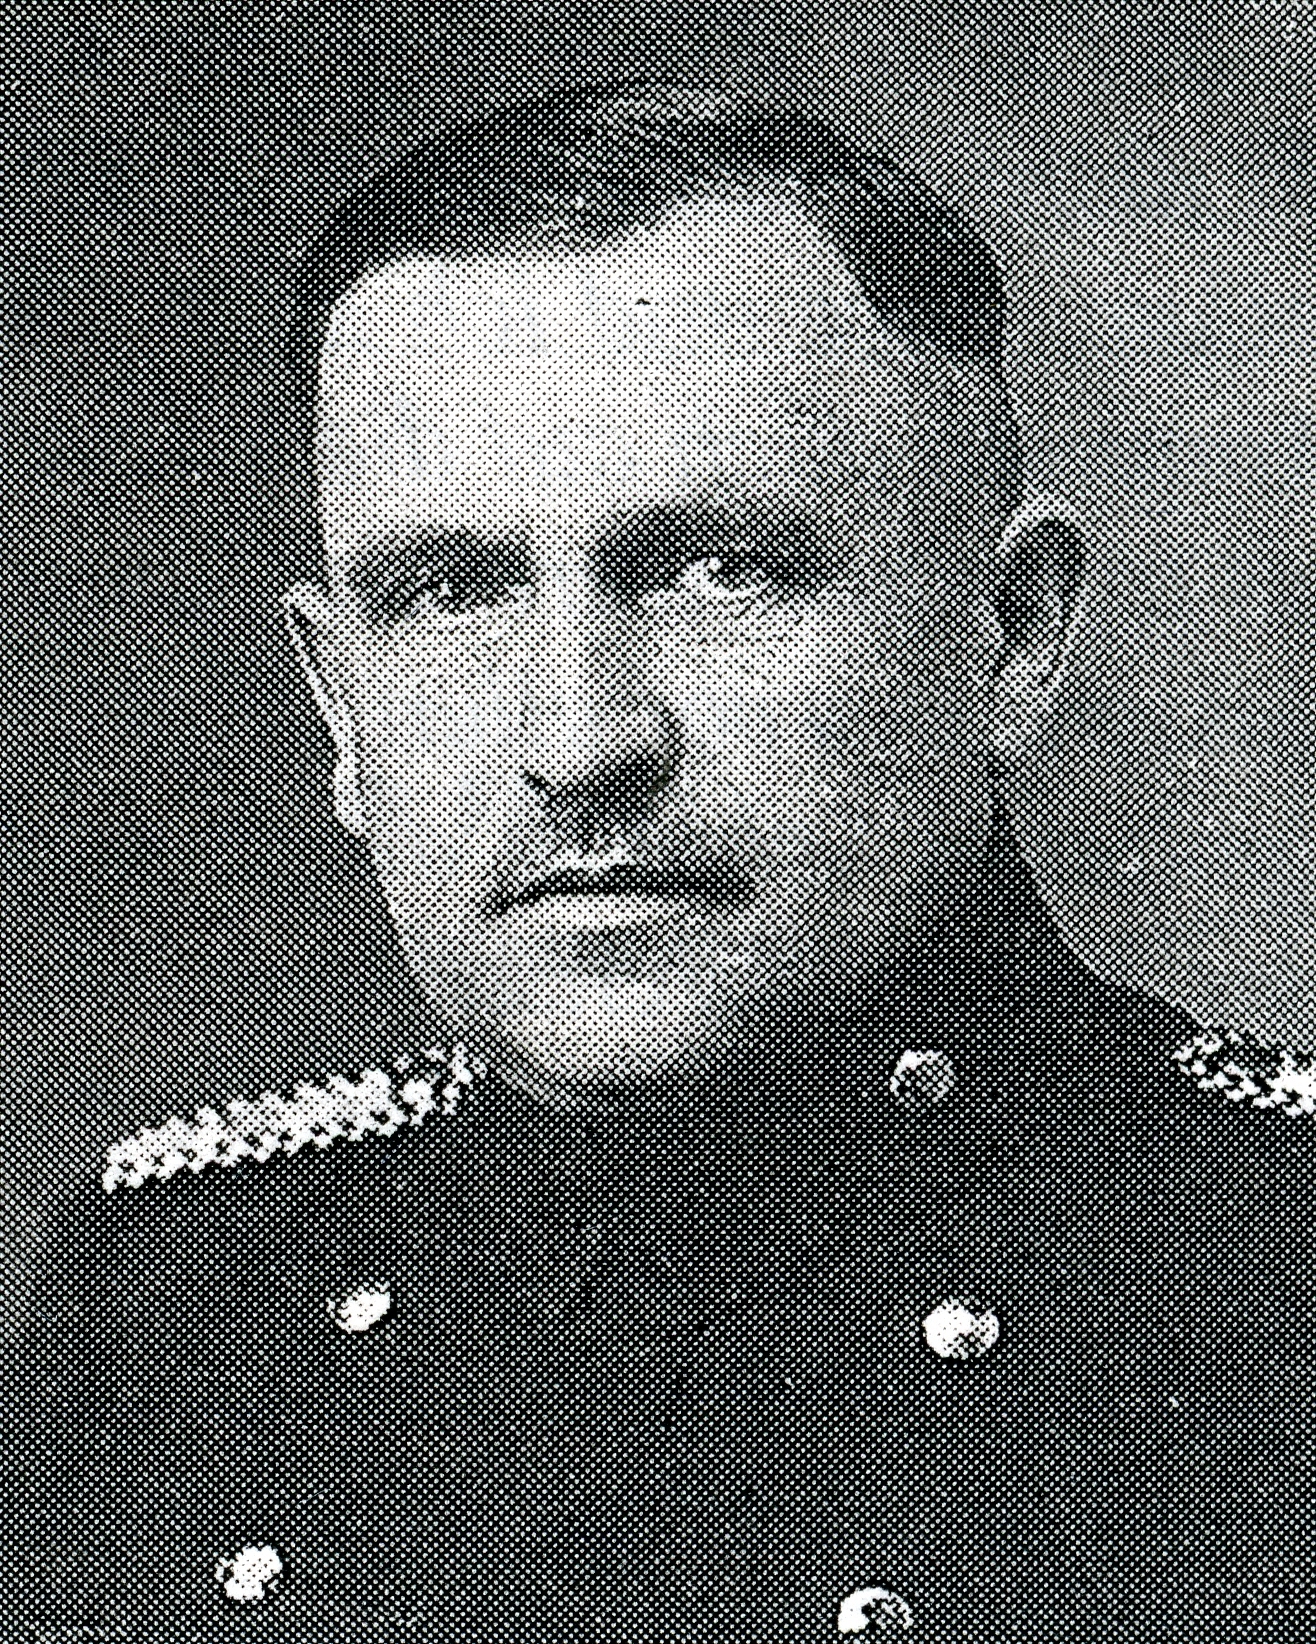 Georg Wiemer (1890-1950)